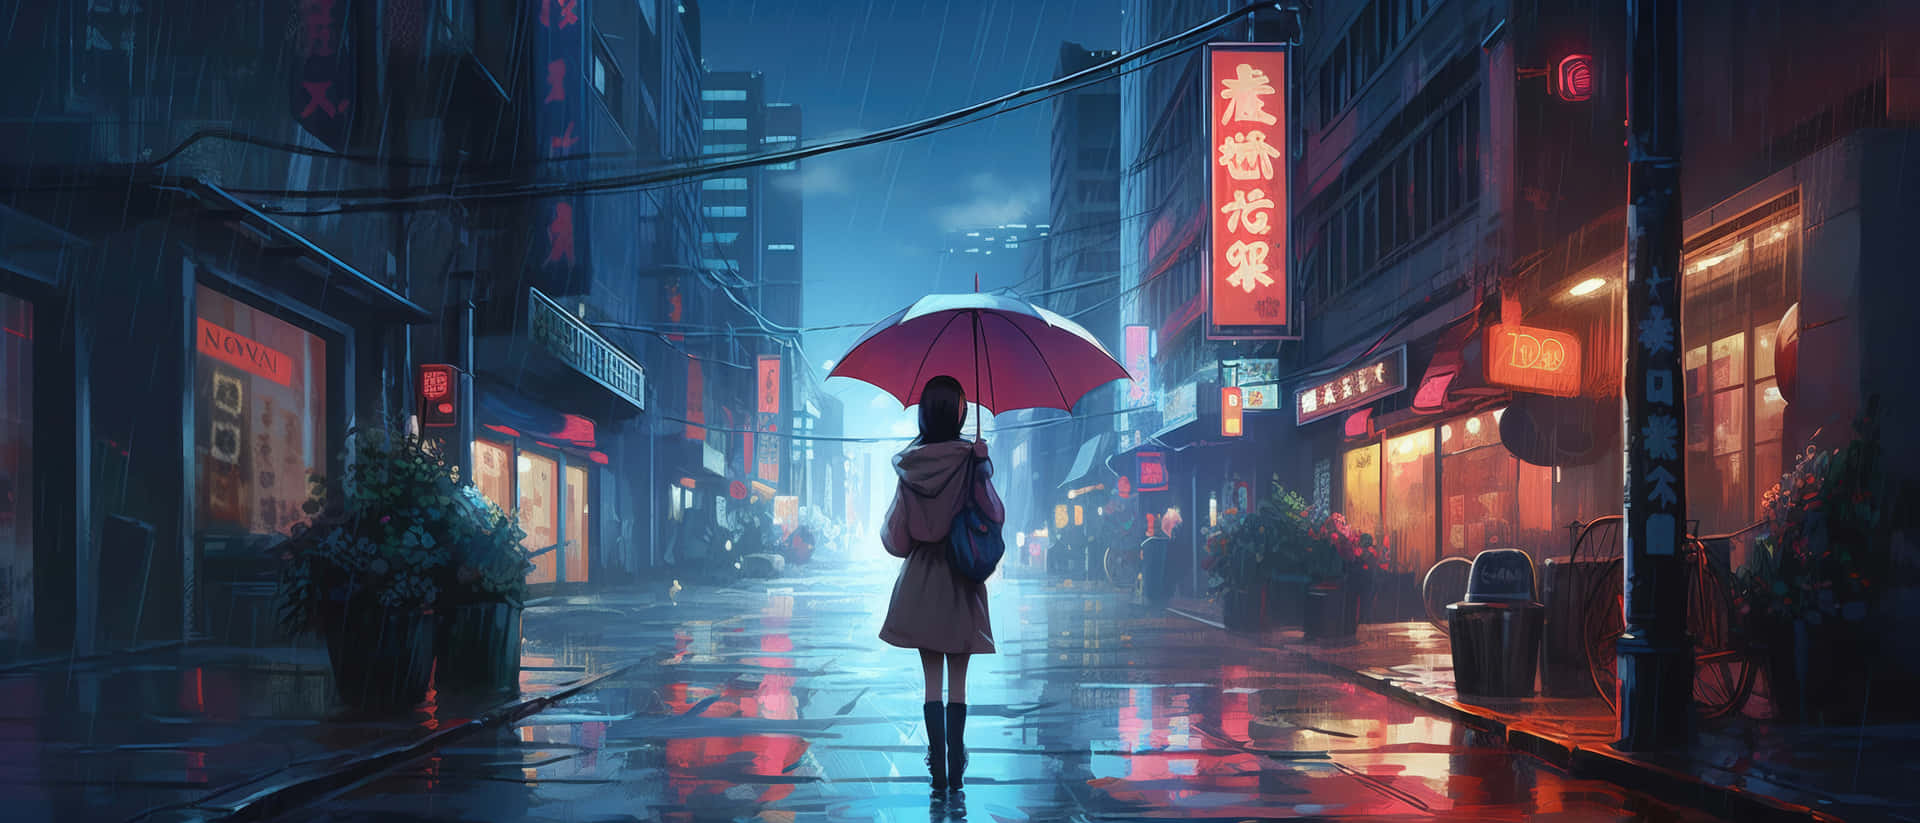 Rainy Night Cityscapewith Umbrella Background